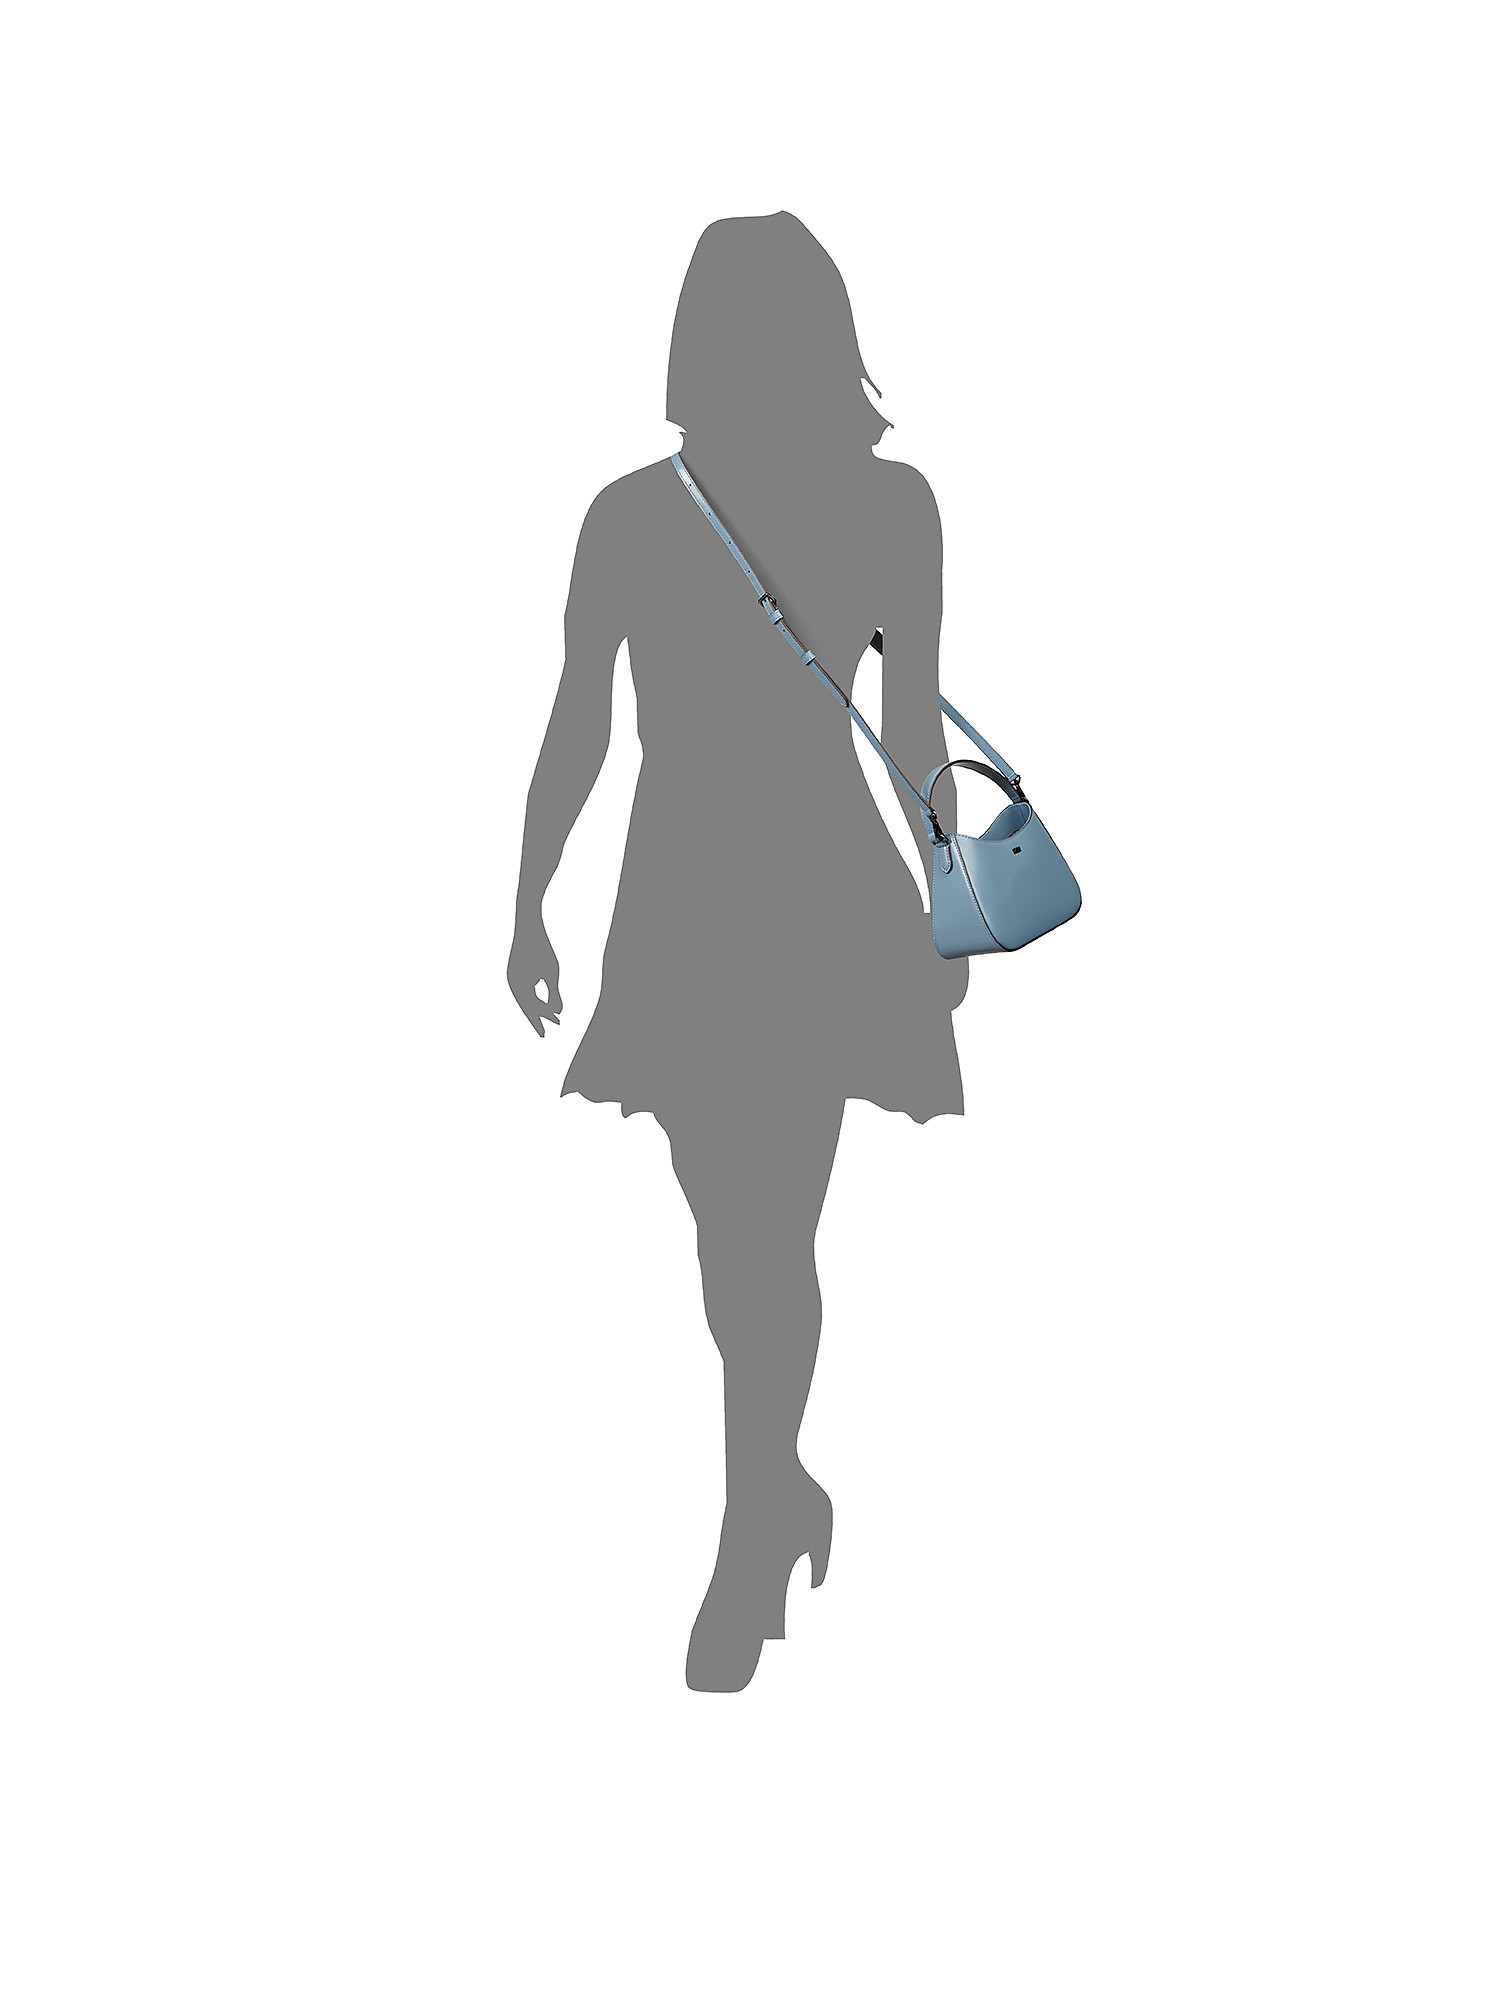 Dkny - Ellie bag with removable tarcolla, Light Blue, large image number 5